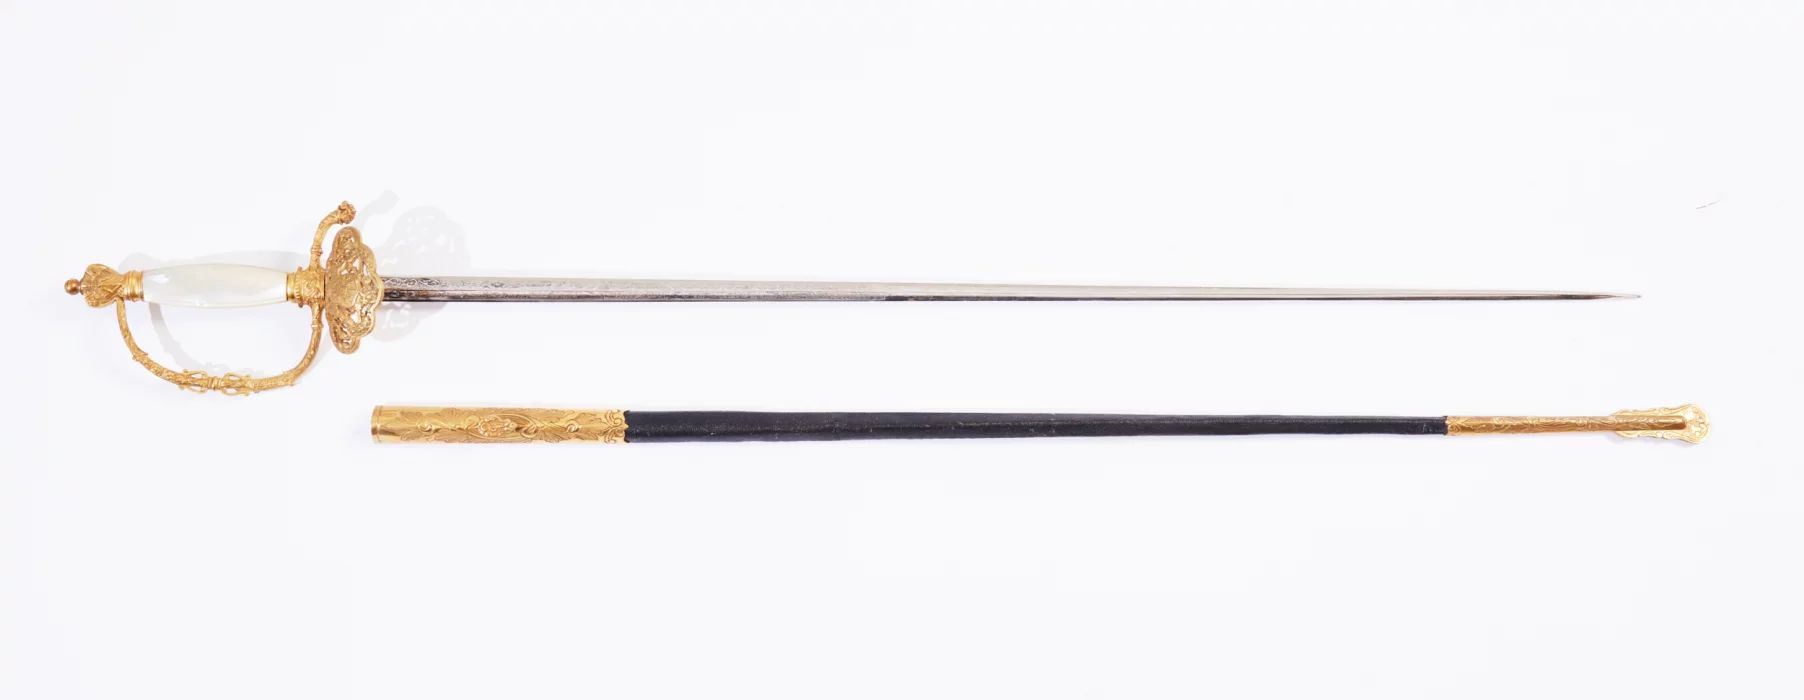 A ceremonial sword for civil servants. 